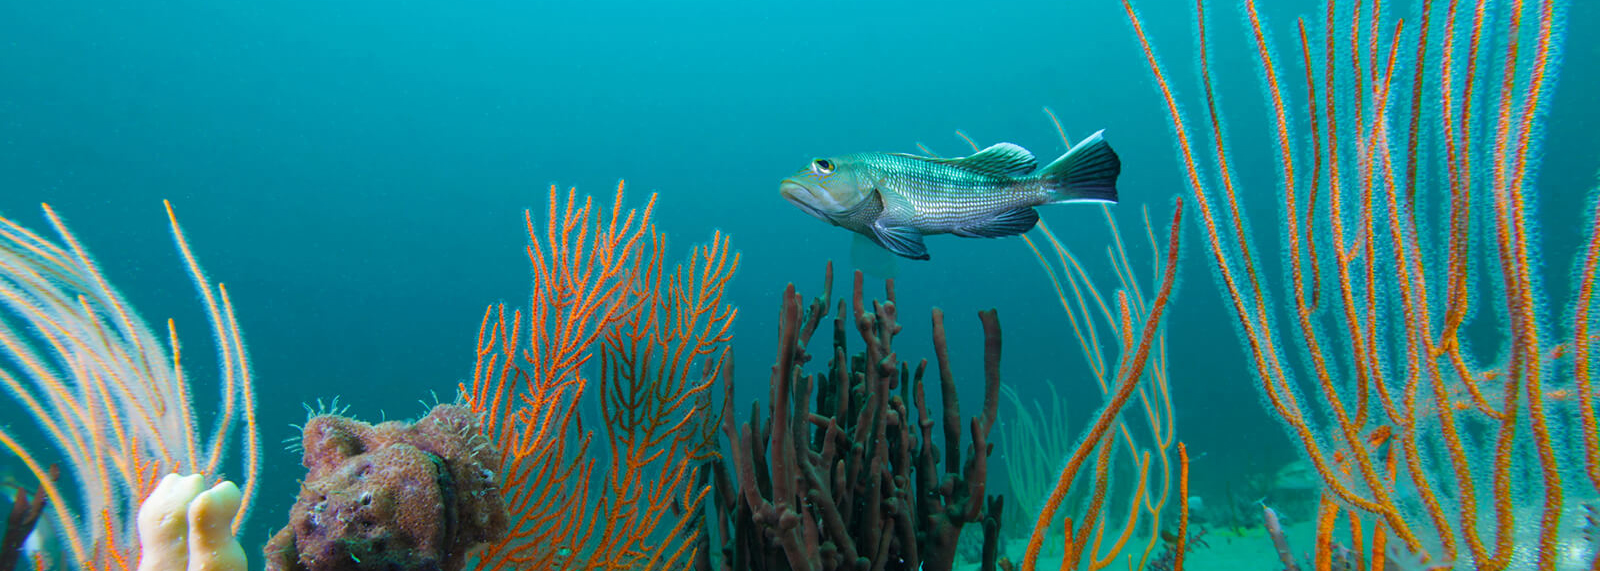 A black sea bass on a reef.